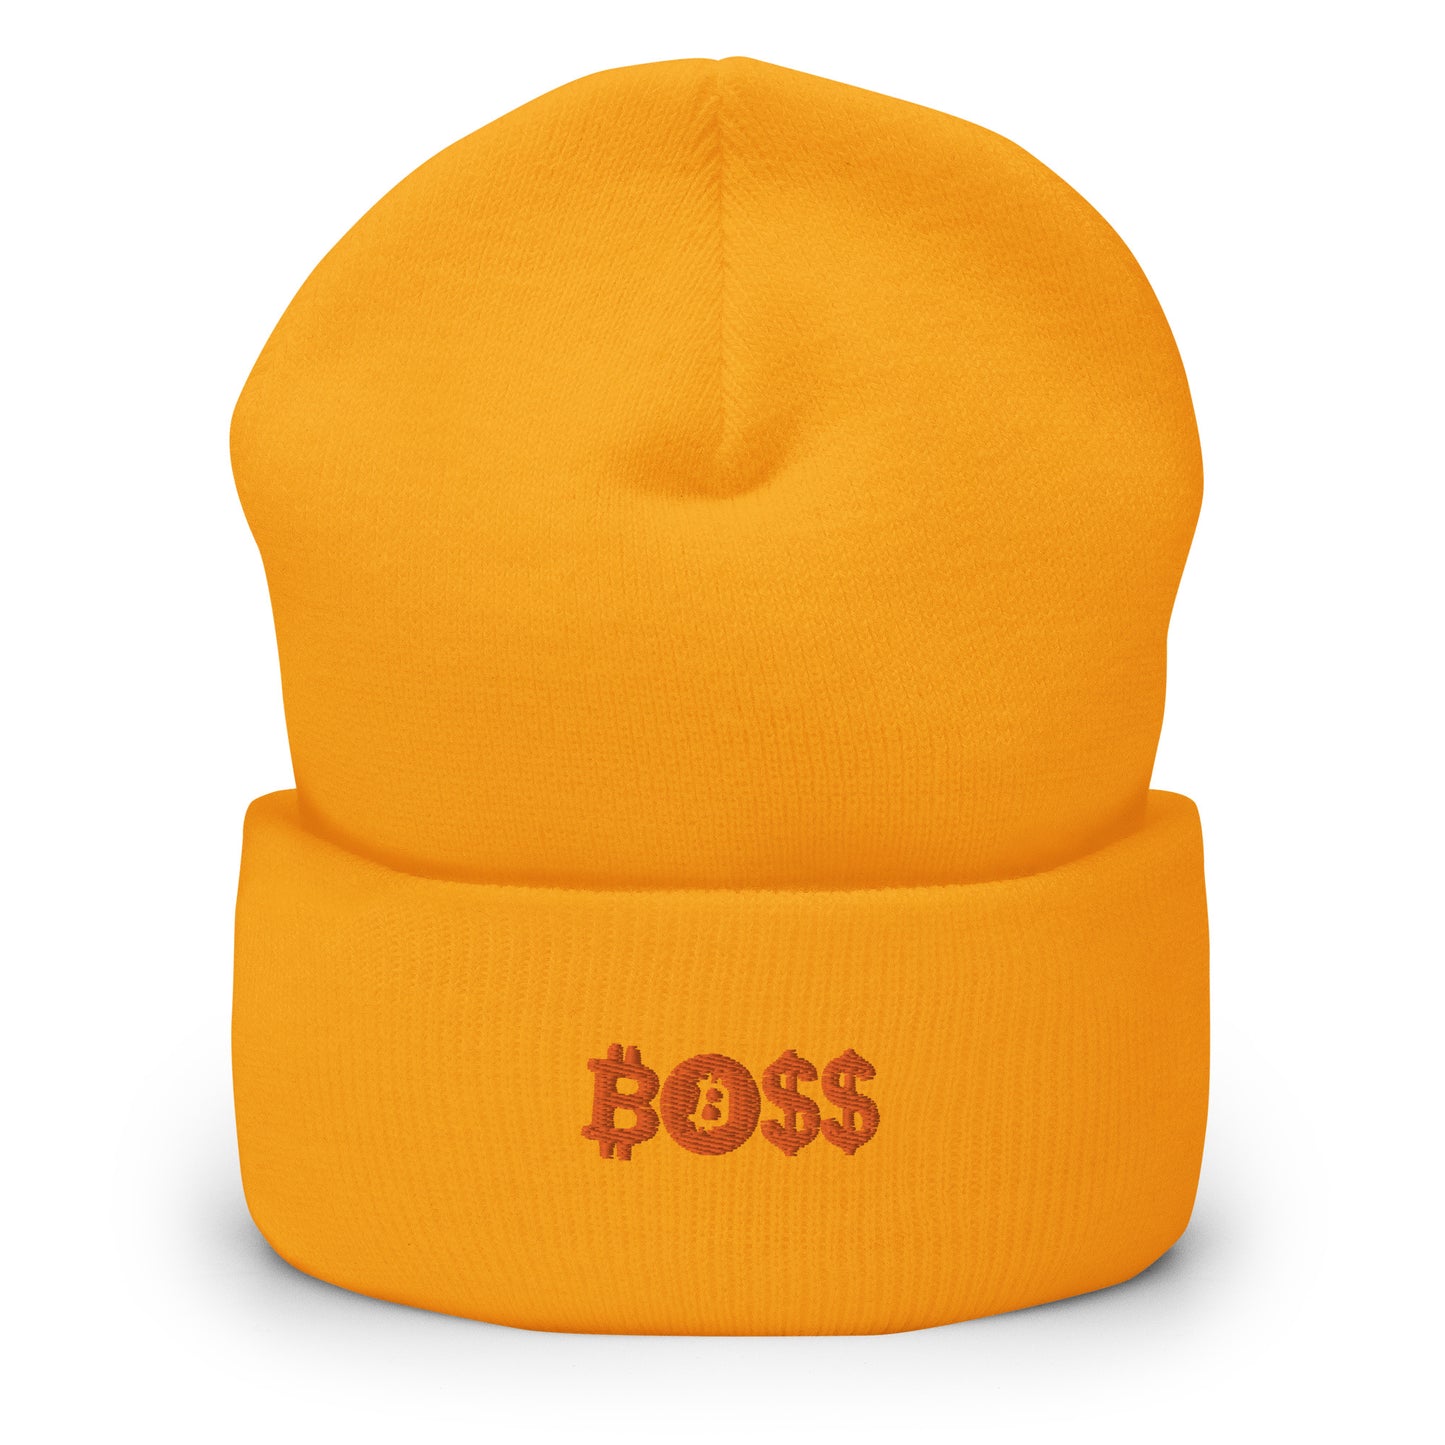 BITCOIN BOSS - Mütze mit Umschlag bestickt